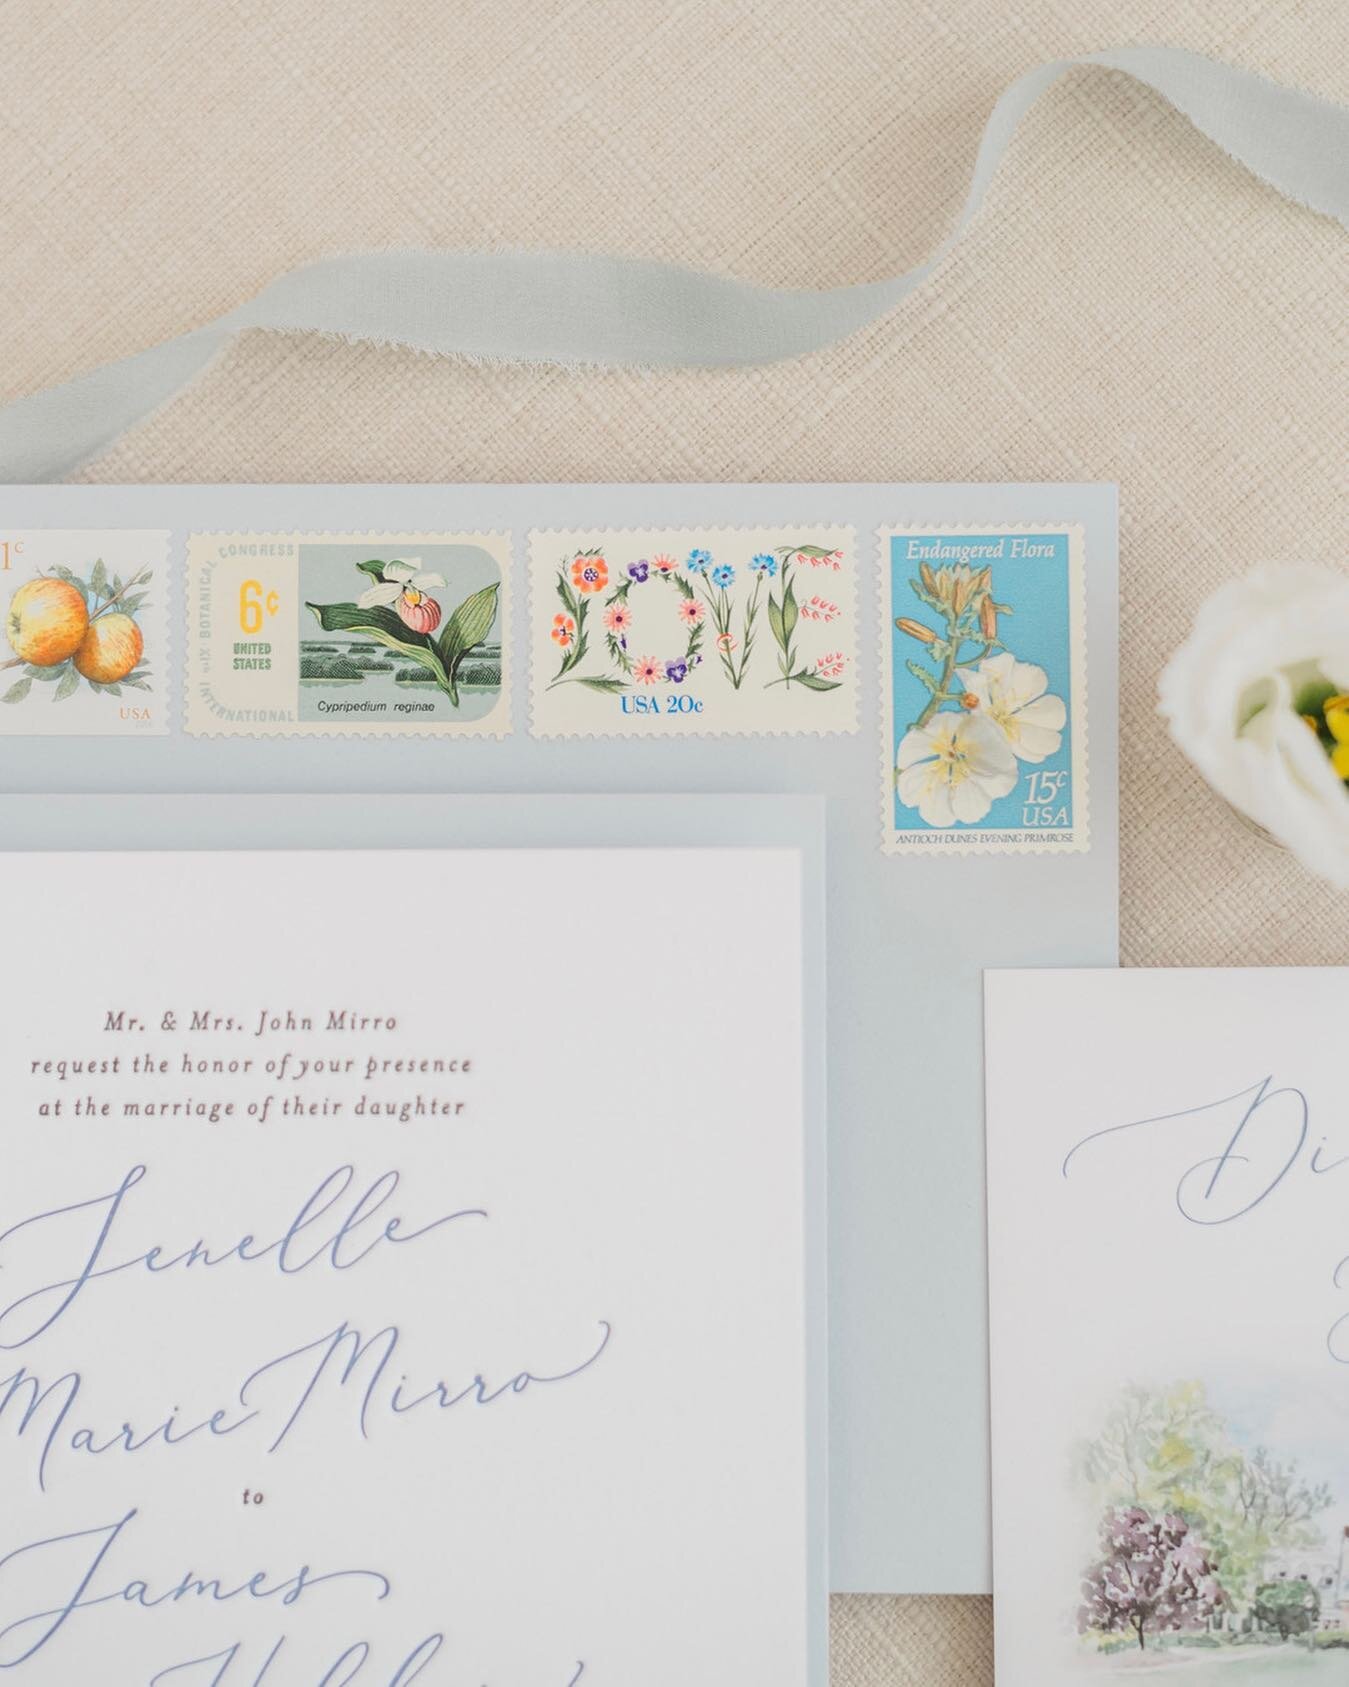 Vintage stamps will always have our heart 💛 #customweddingstationery #vintagepostagestamps #kellydesignco
⠀⠀⠀⠀⠀⠀⠀⠀⠀
Photographer: @theassociateteam, @jamiefishercollective, @brittelizphoto | Venue: @graycegardens | Planner: @eventscometrue_ | Floral